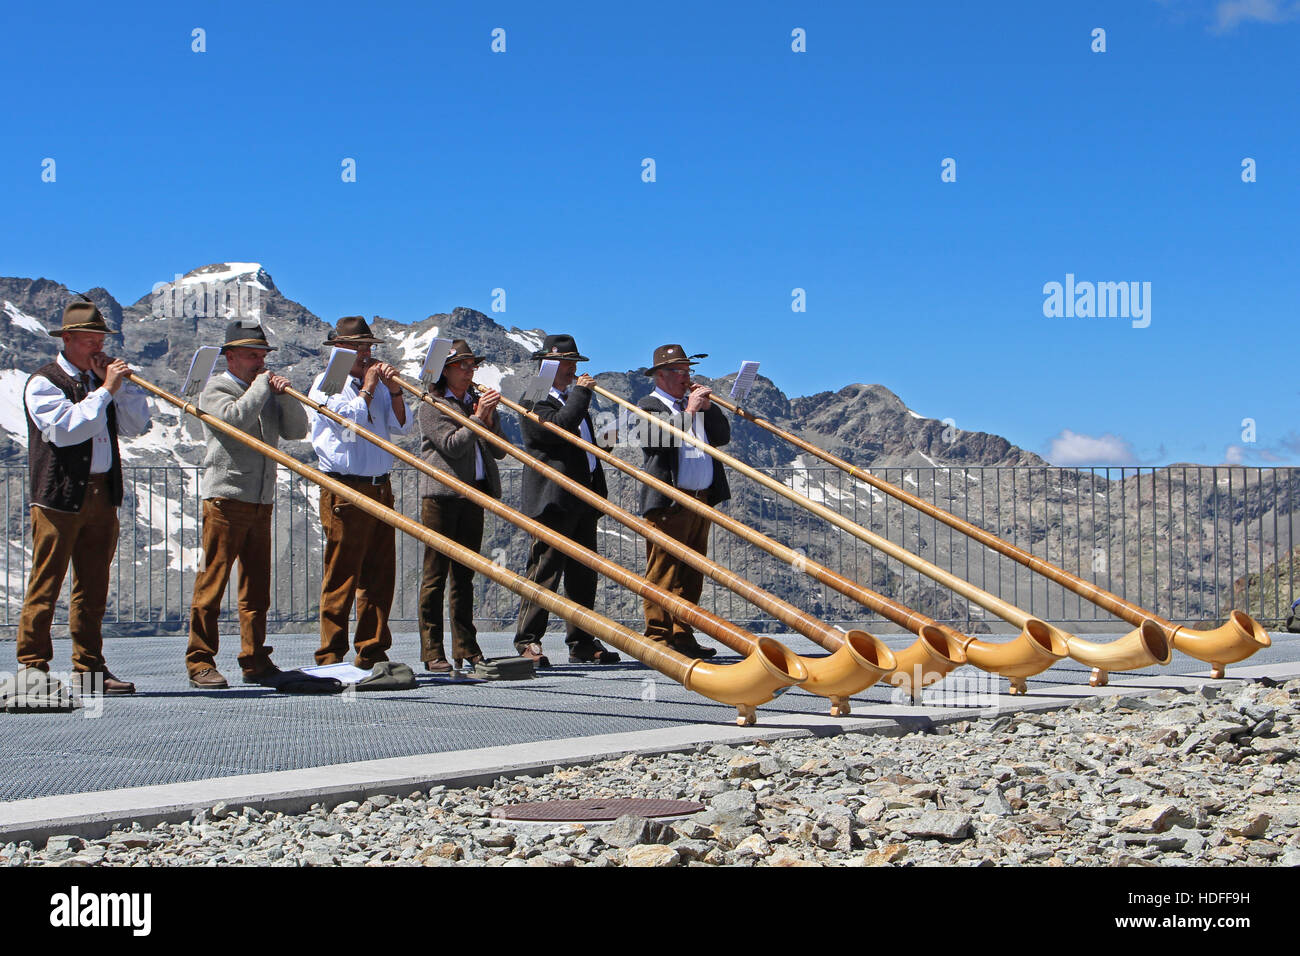 Six Swiss alphorn blowers on top of a Swiss mountain top Stock Photo